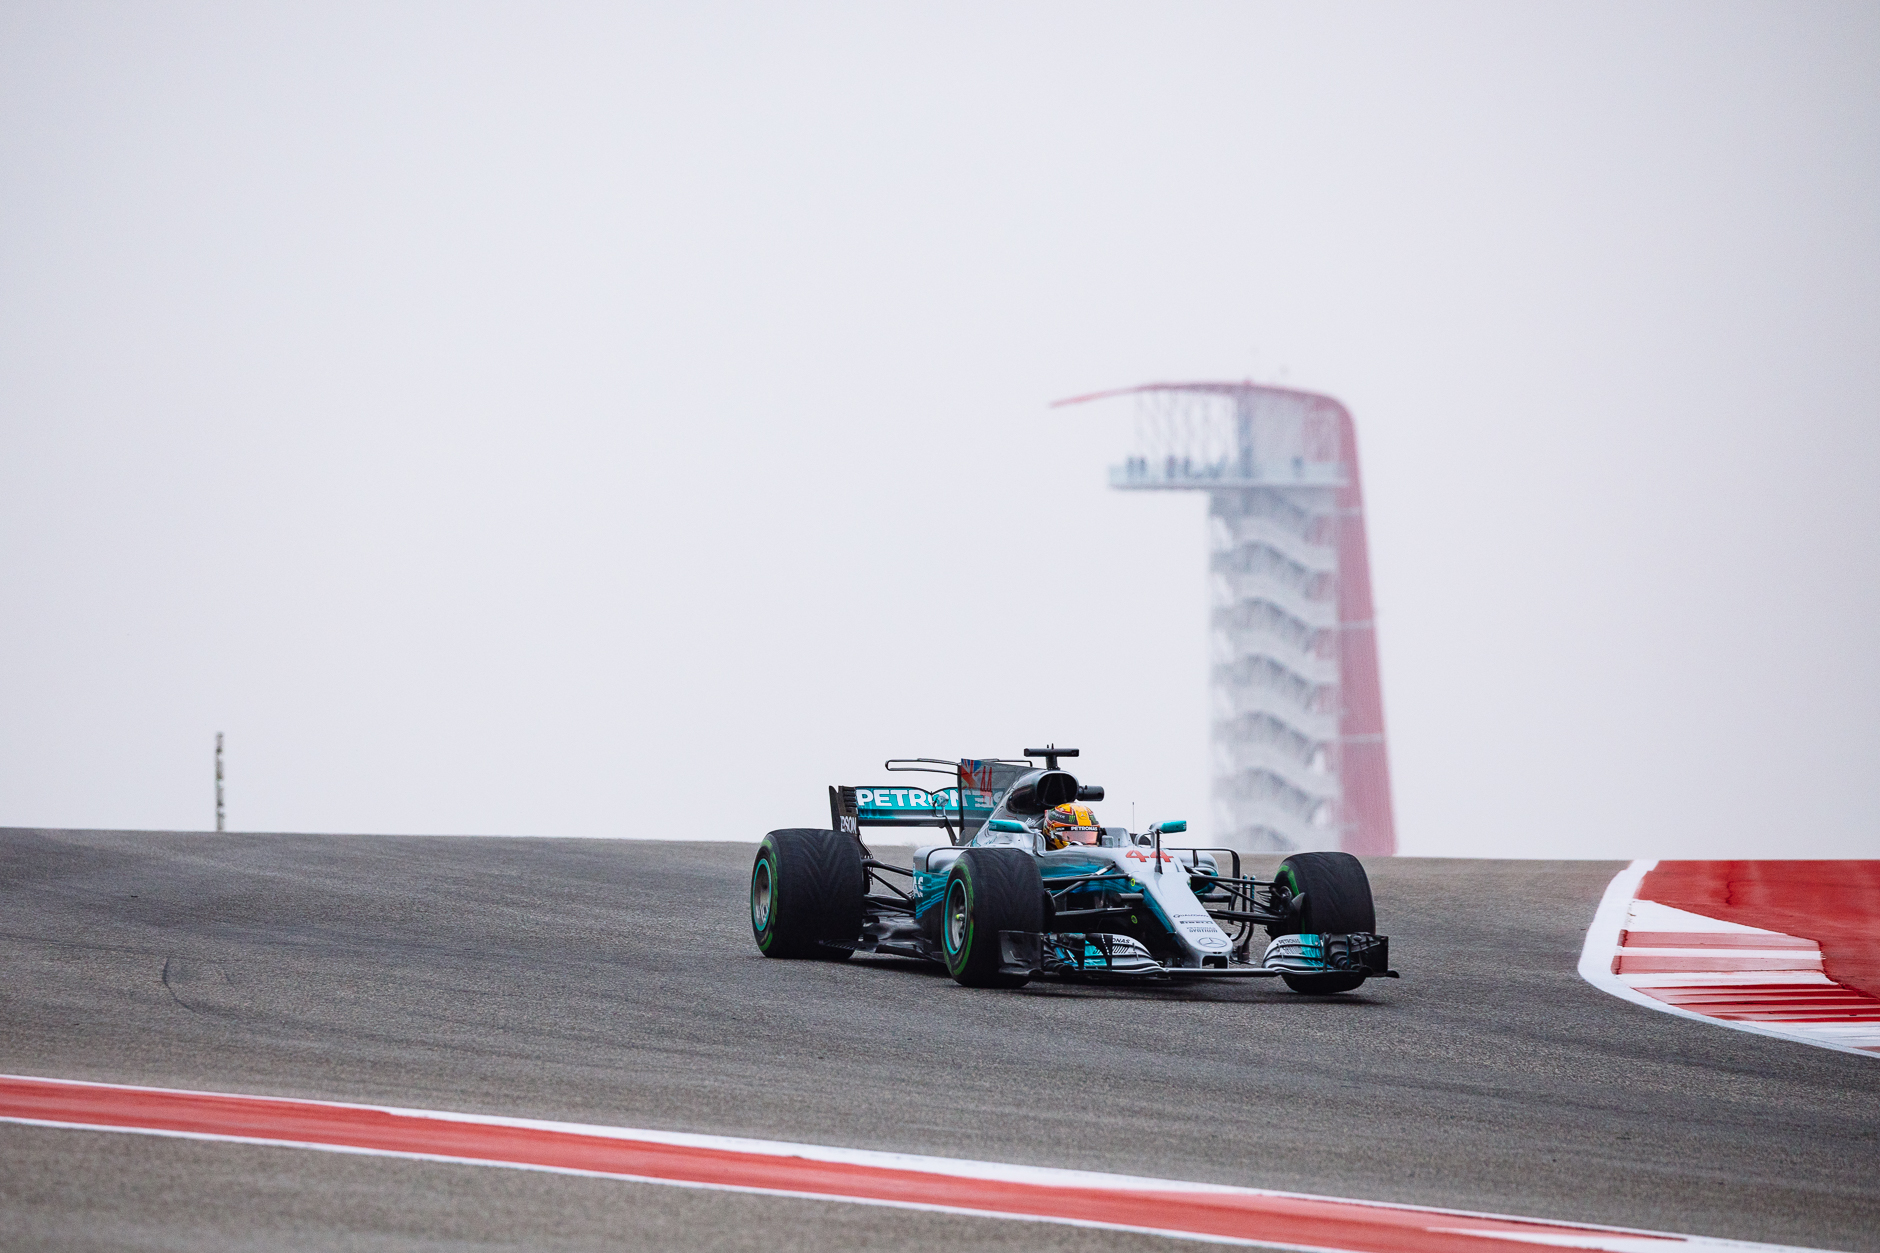 Mercedes AMG Petronas' Lewis Hamilton coming through turn 10 during FP1.